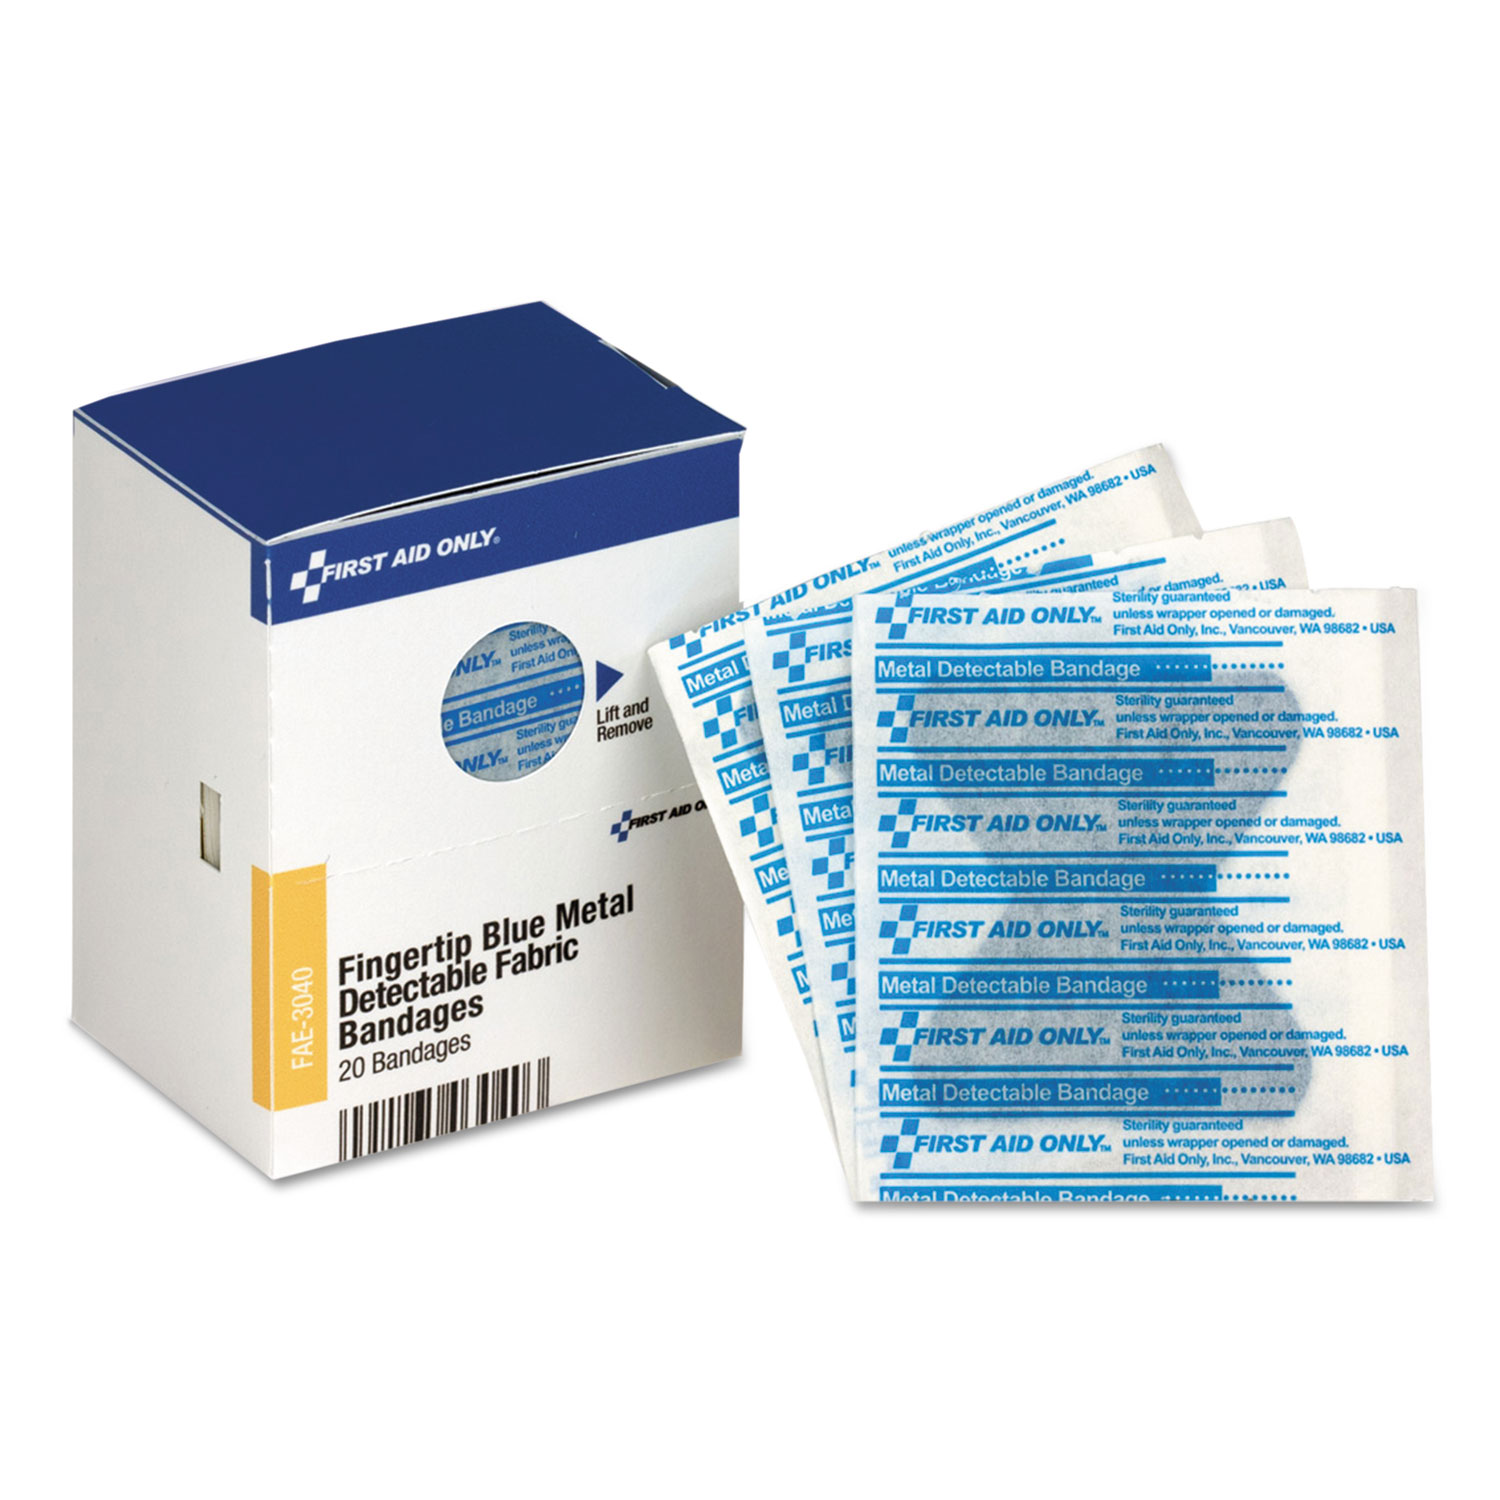 SmartCompliance Blue Metal Detectable Bandages,Fingertip,1 3/4x2, 20 Bx, 24/Ct